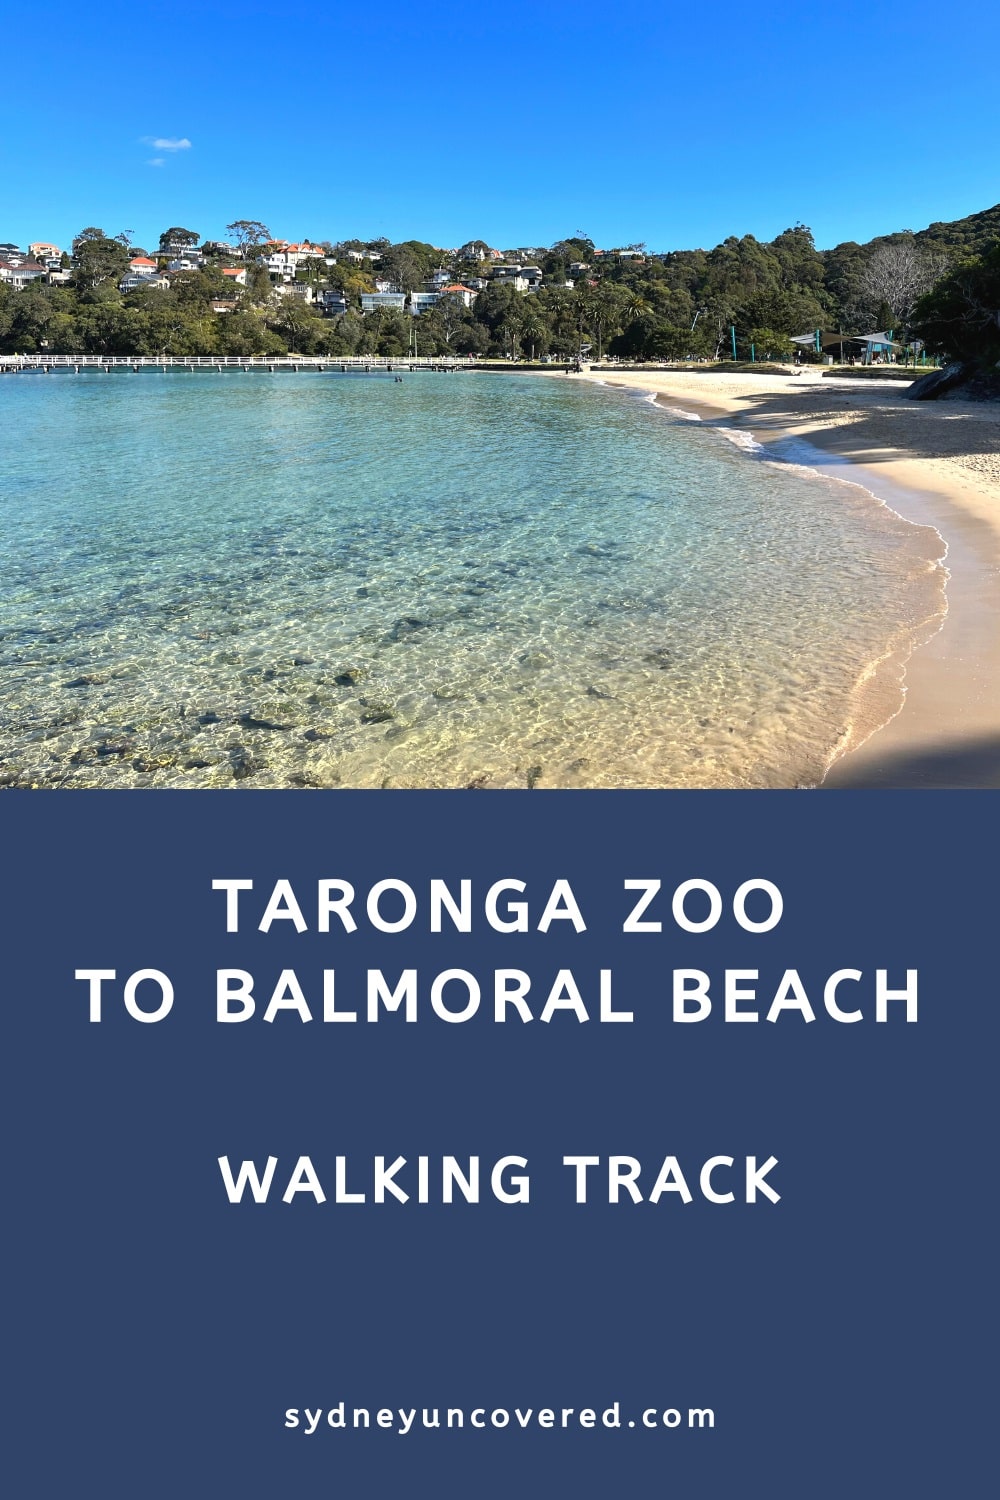 Taronga Zoo to Balmoral Beach walking track